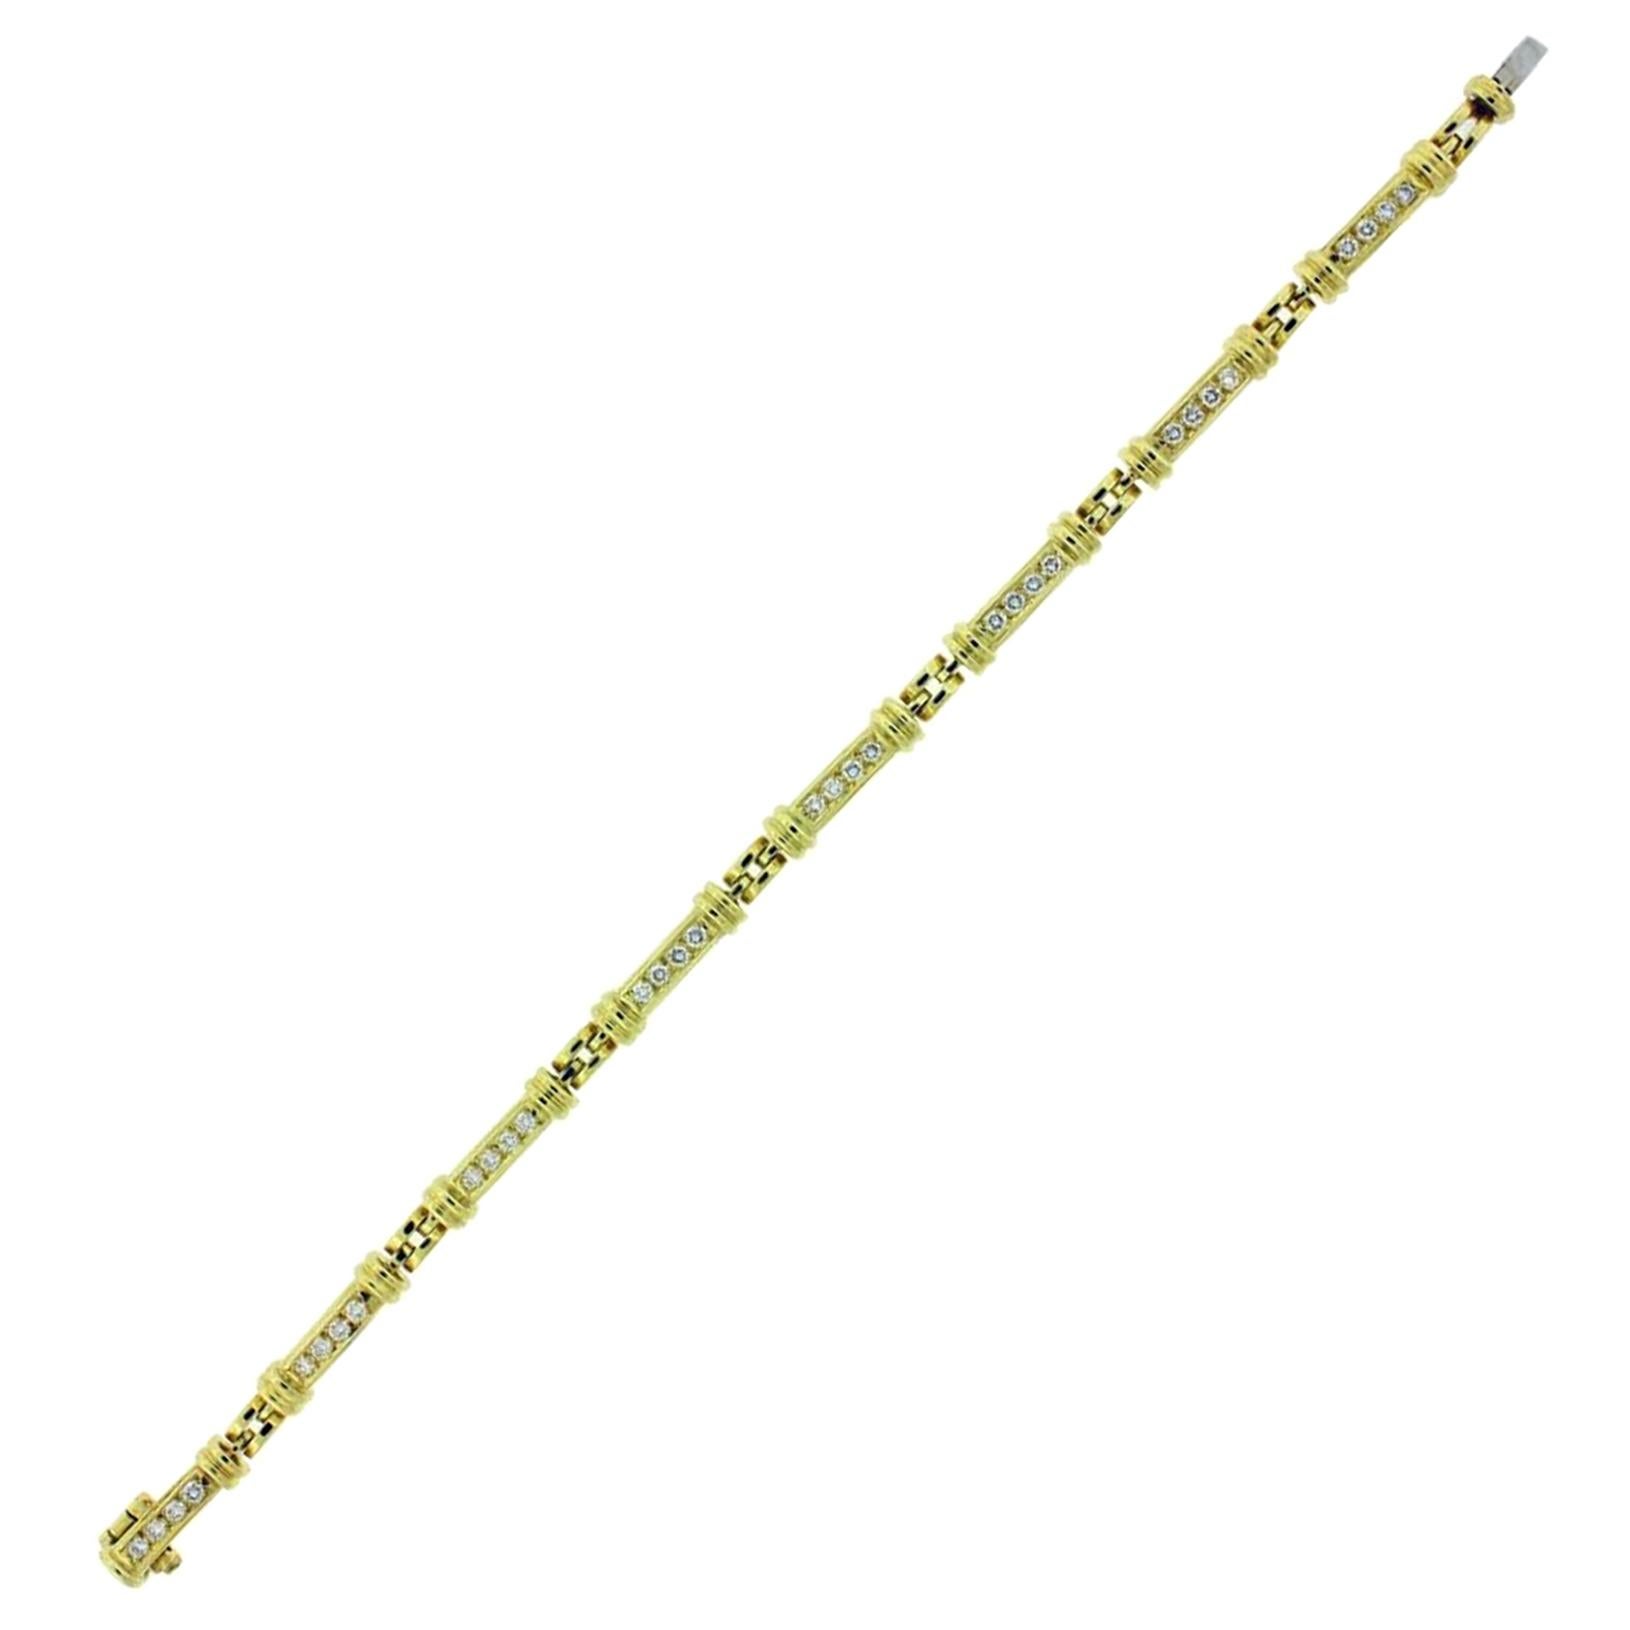 Tiffany & Co. 1 Carat Diamond Tennis Line Bracelet in 18 Karat Yellow Gold